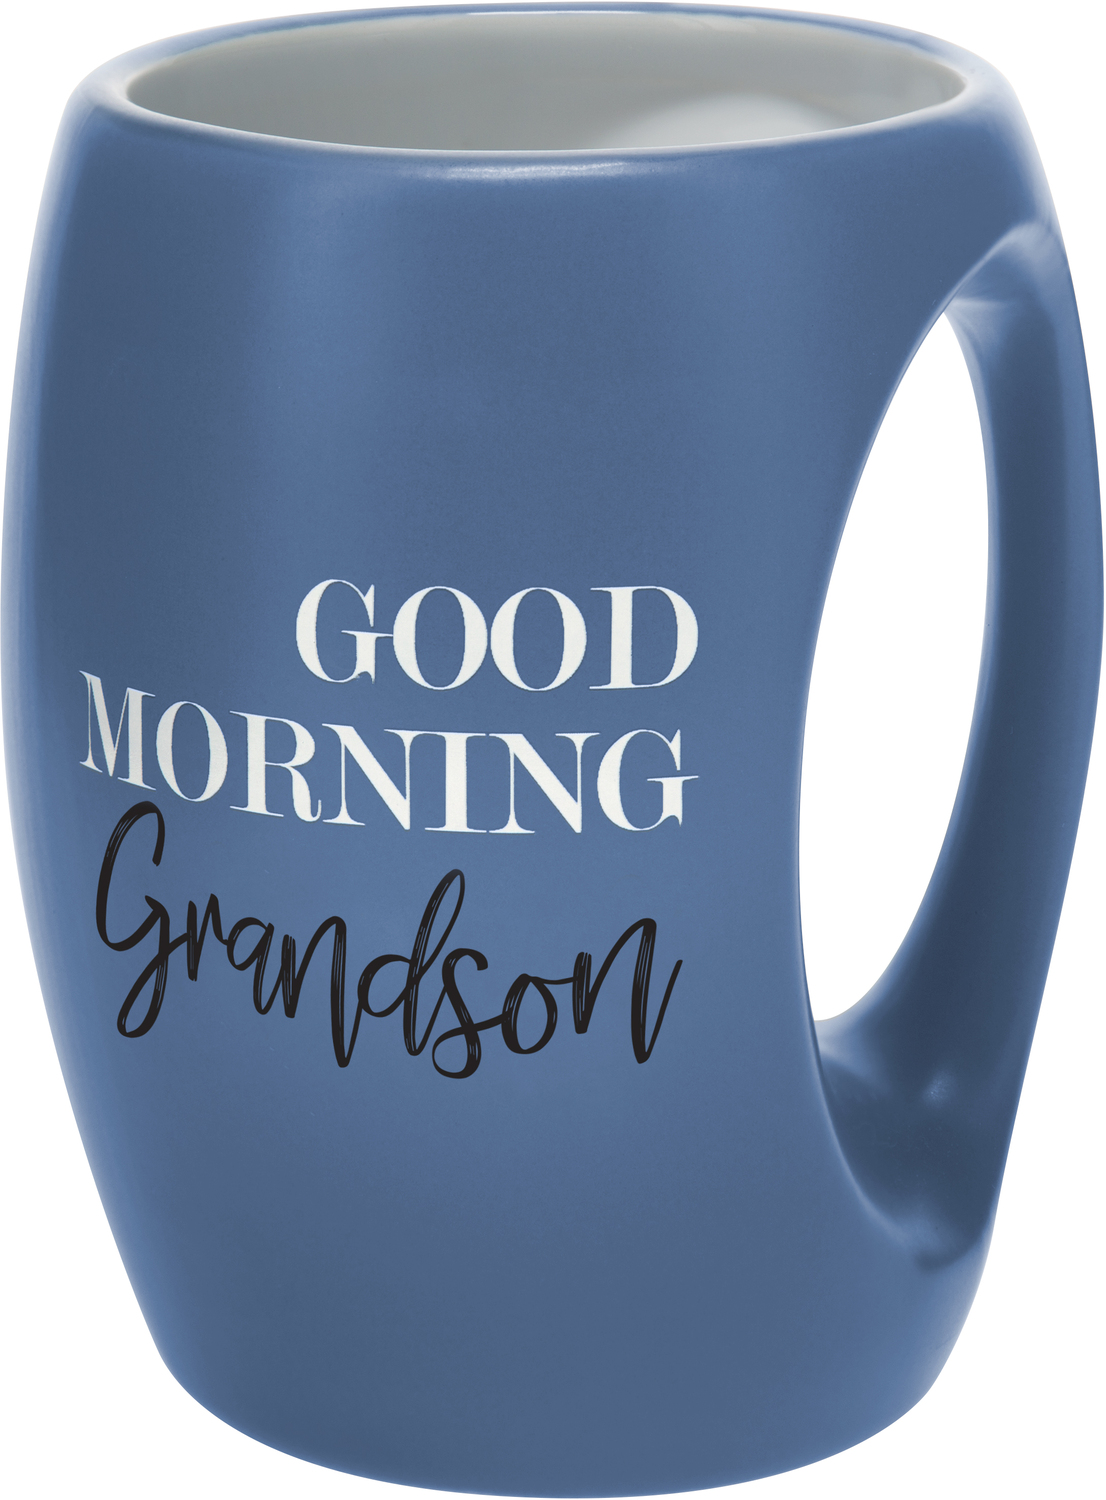 Grandson by Good Morning - Grandson - 16 oz Cup